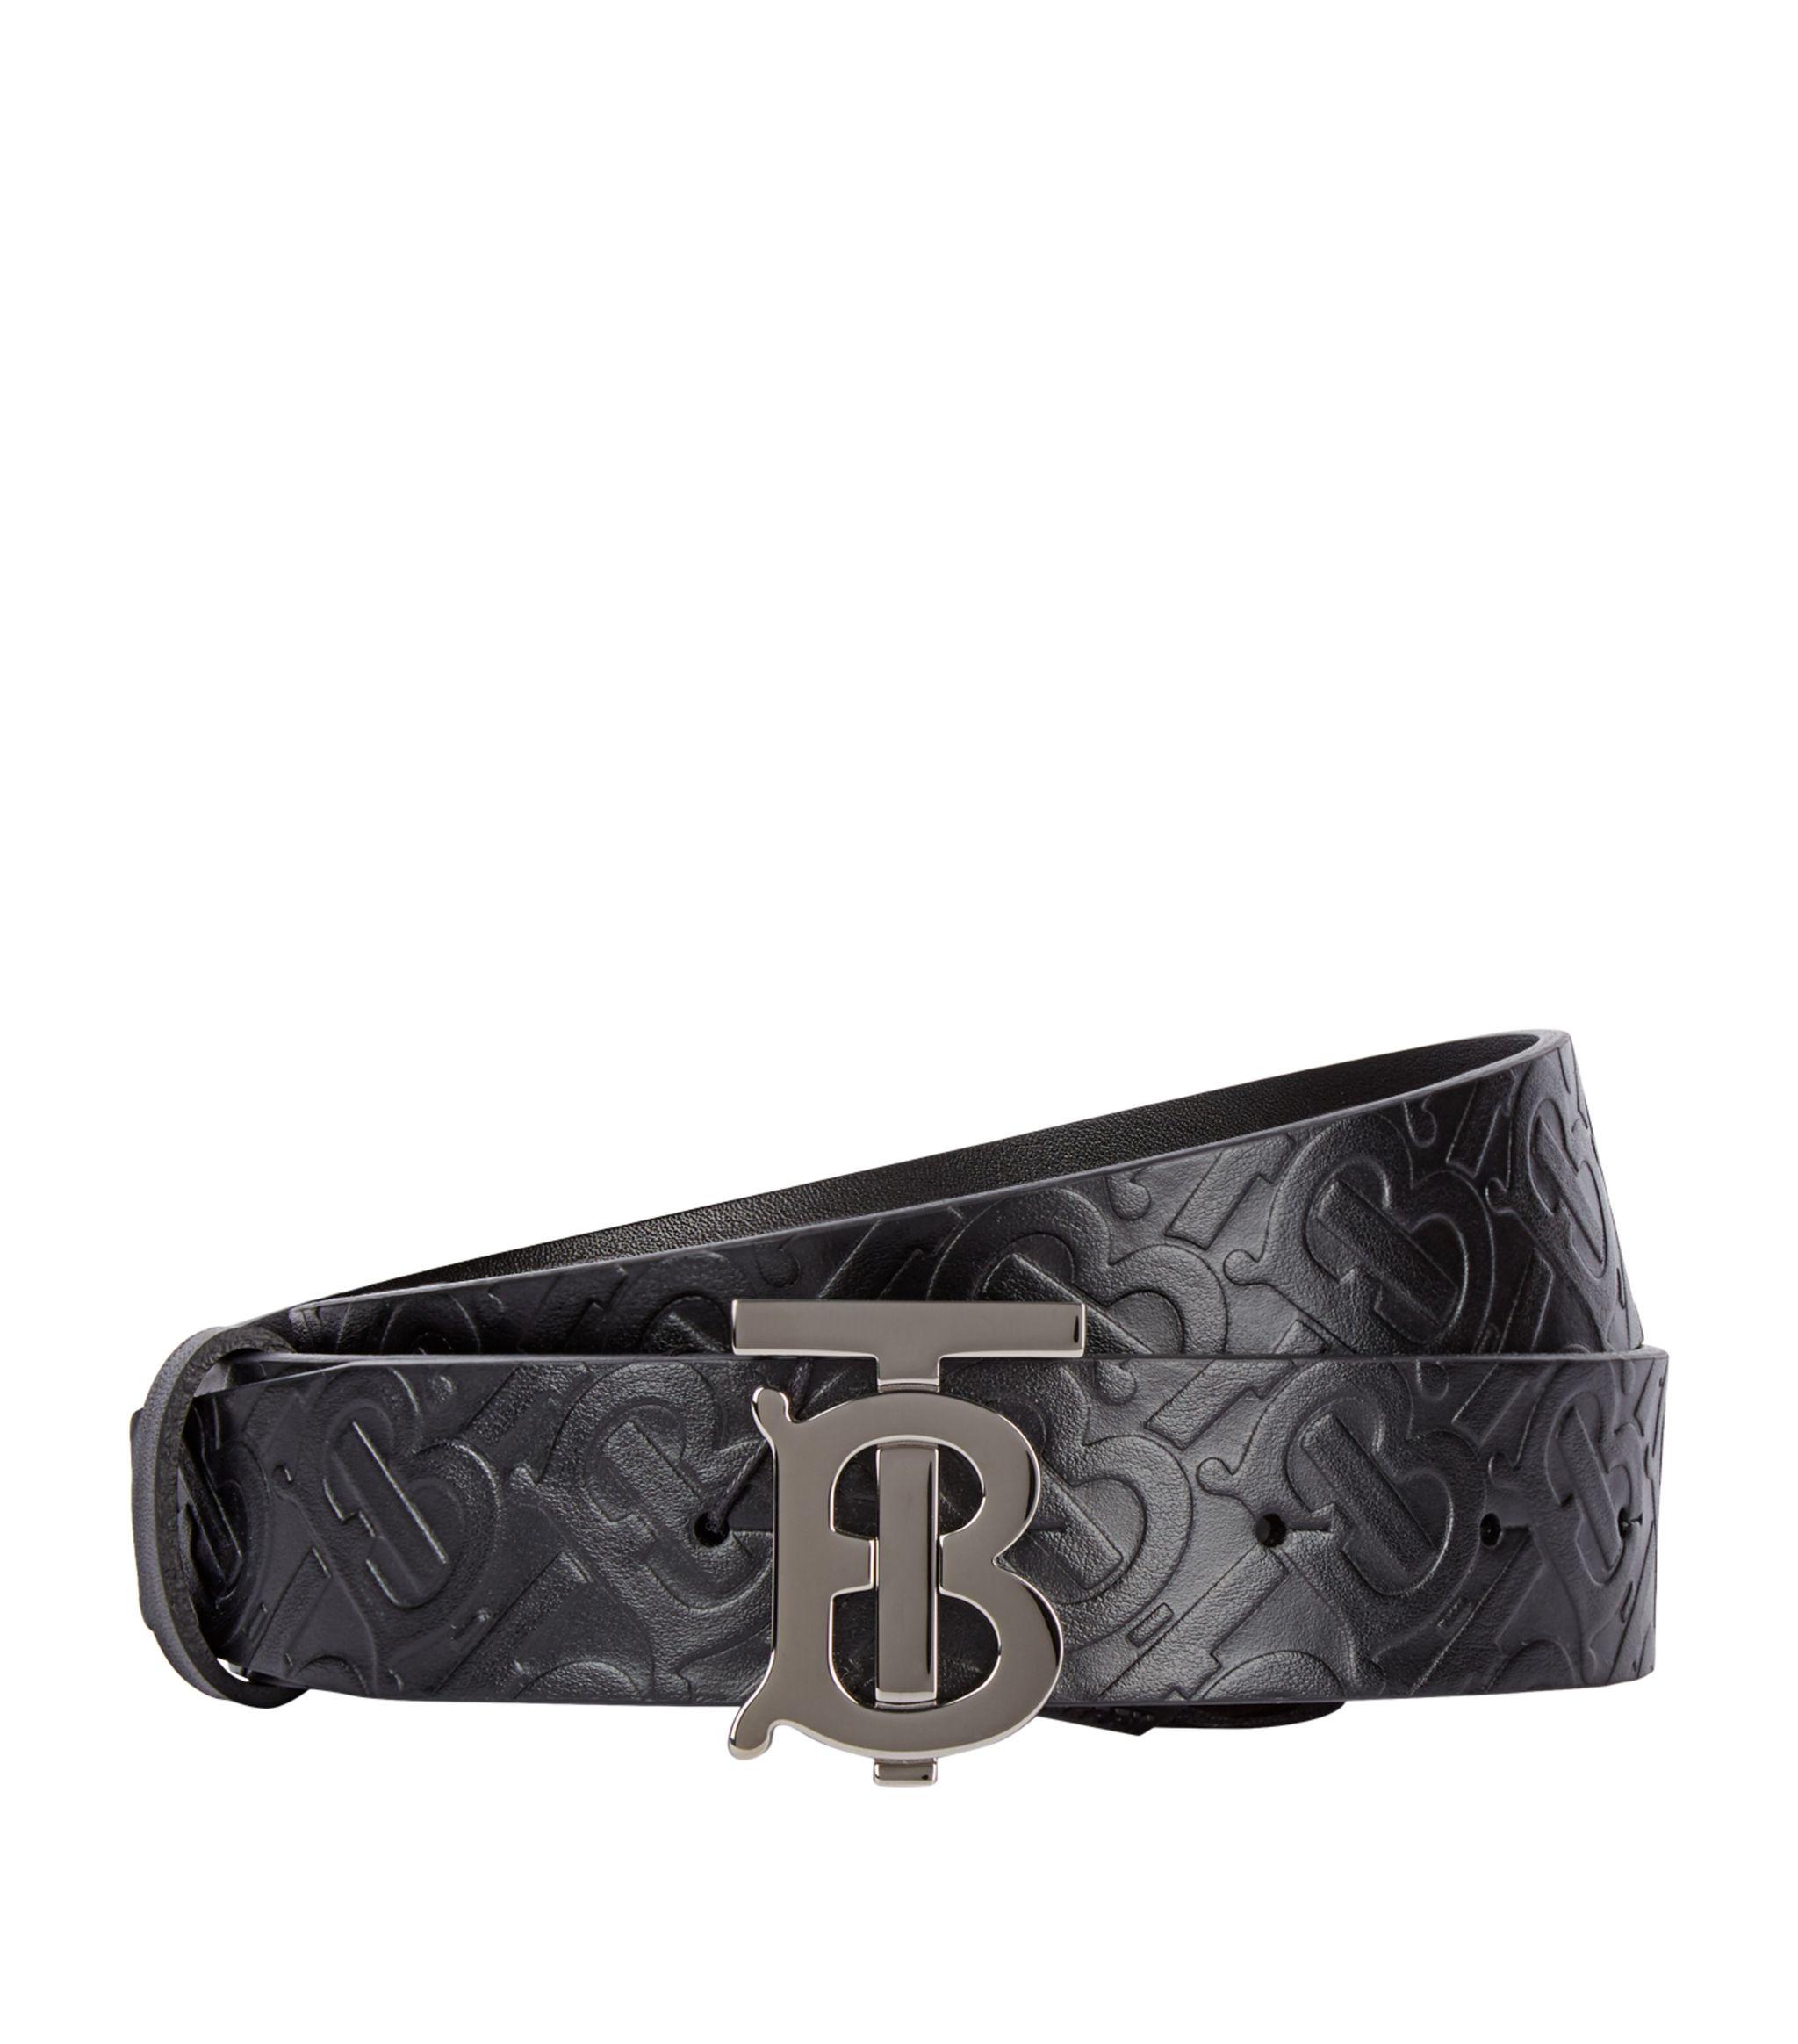 Burberry Leather Tb Monogram Belt in Black for Men - Lyst